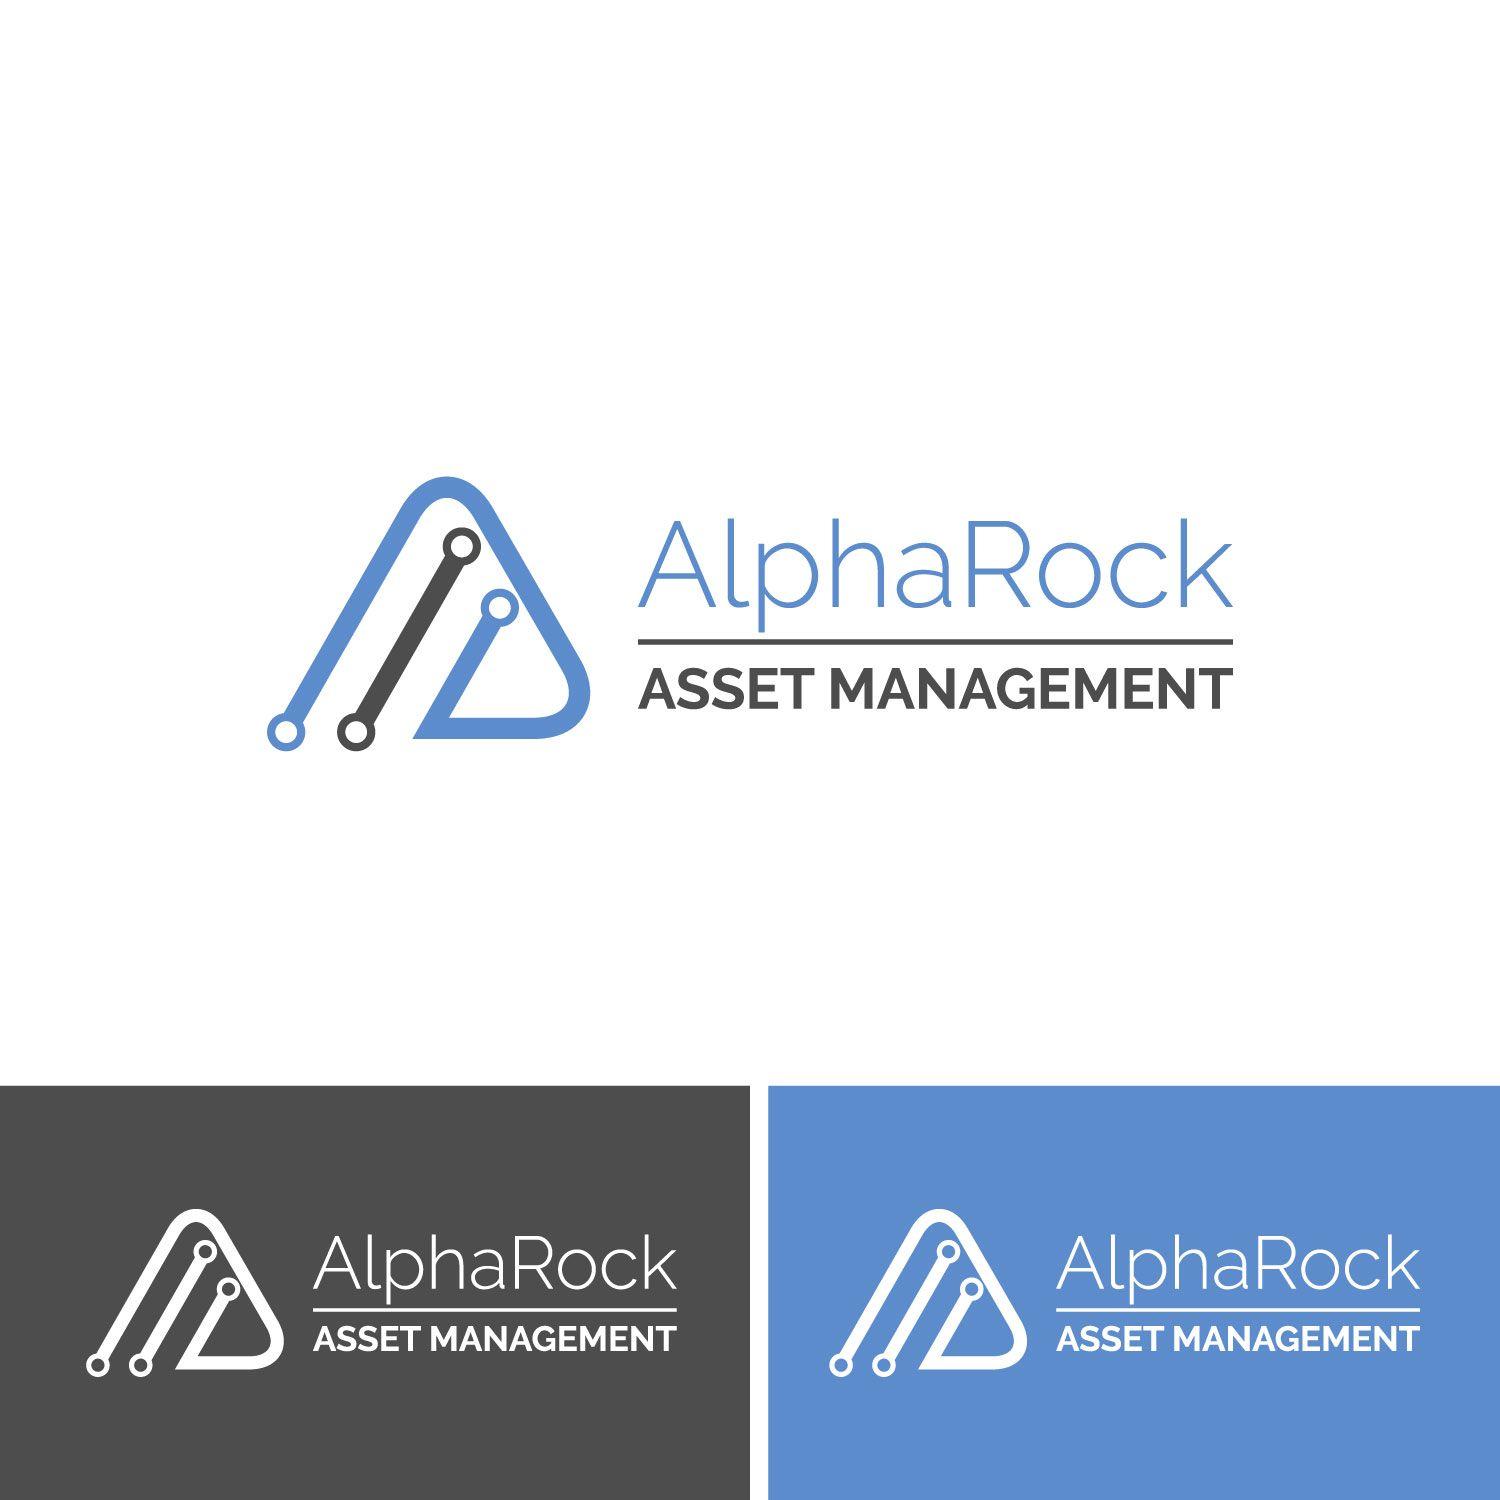 Freeman Company Logo - Logo Design for AlphaRock Asset Management by Freeman creation ...